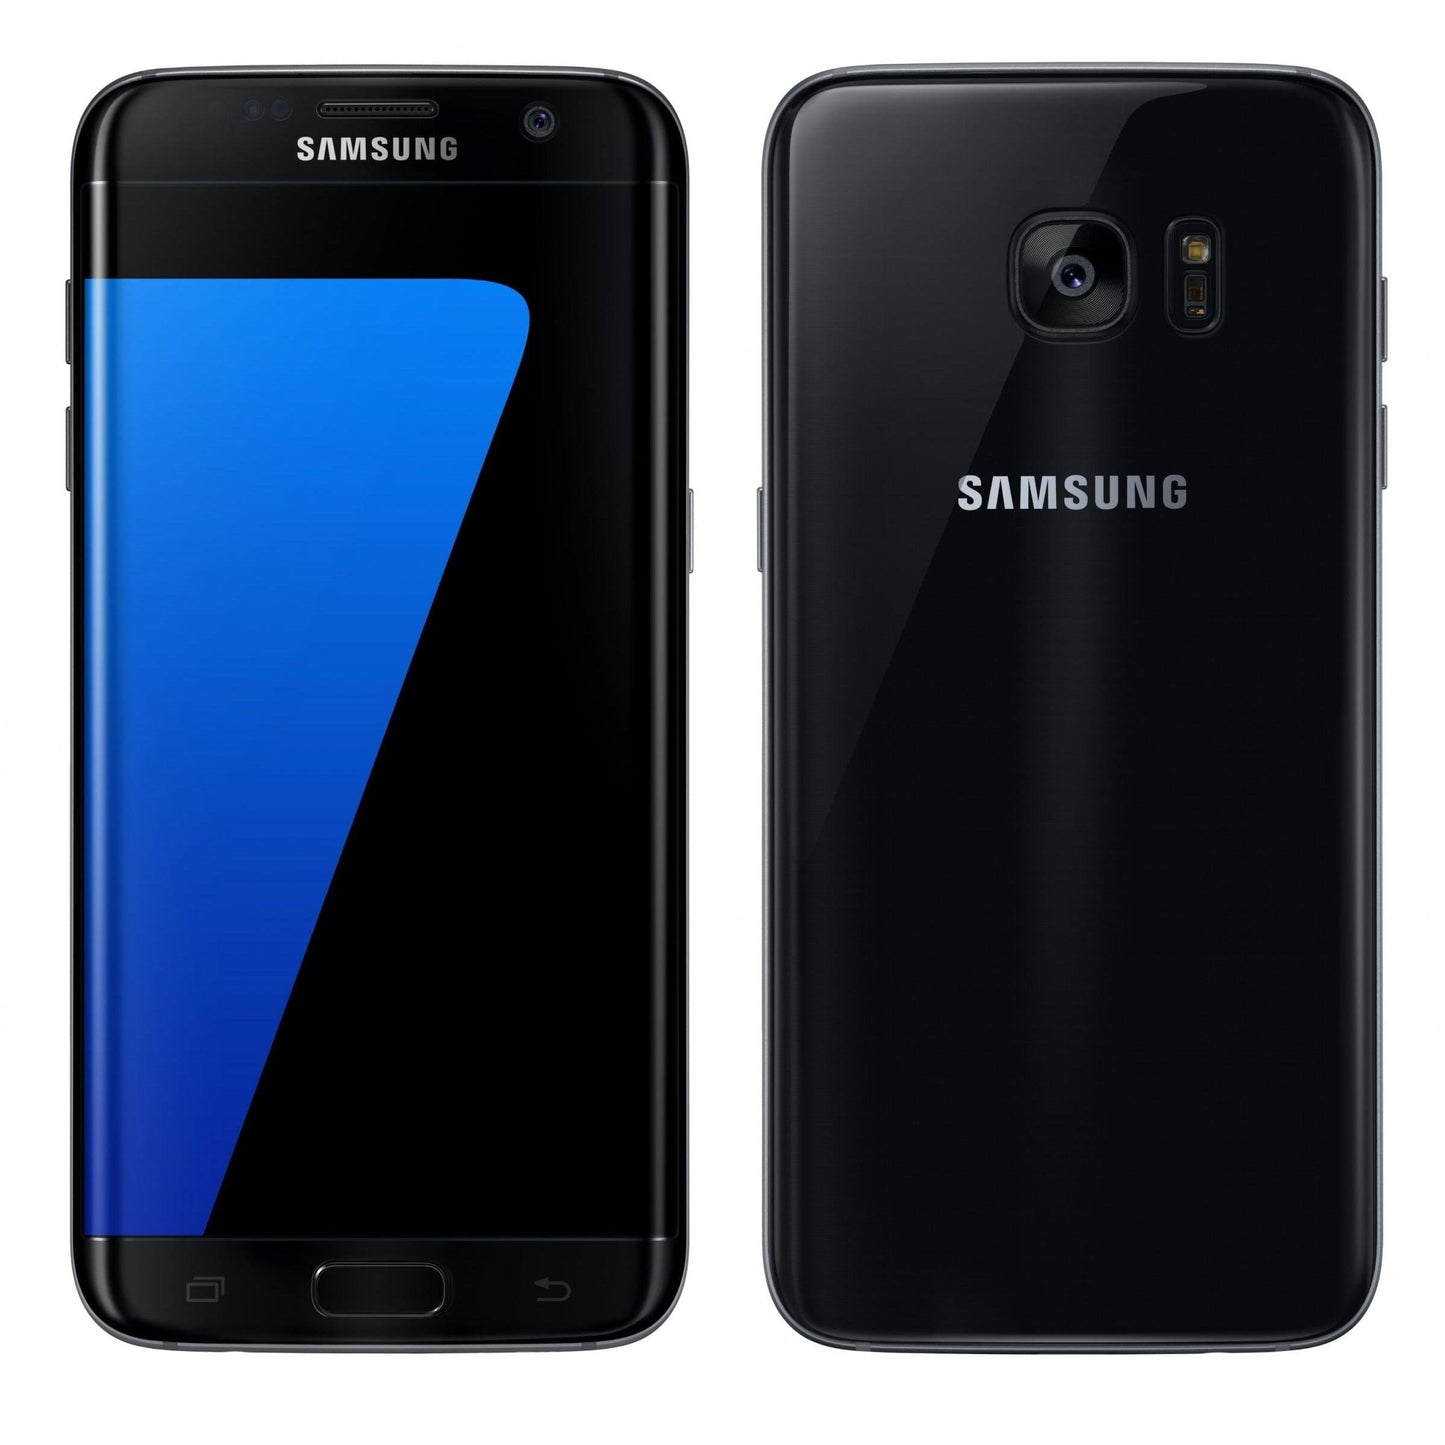 Samsung Galaxy S7 - 32 GB - Black Onyx - Total Wireless - GSM